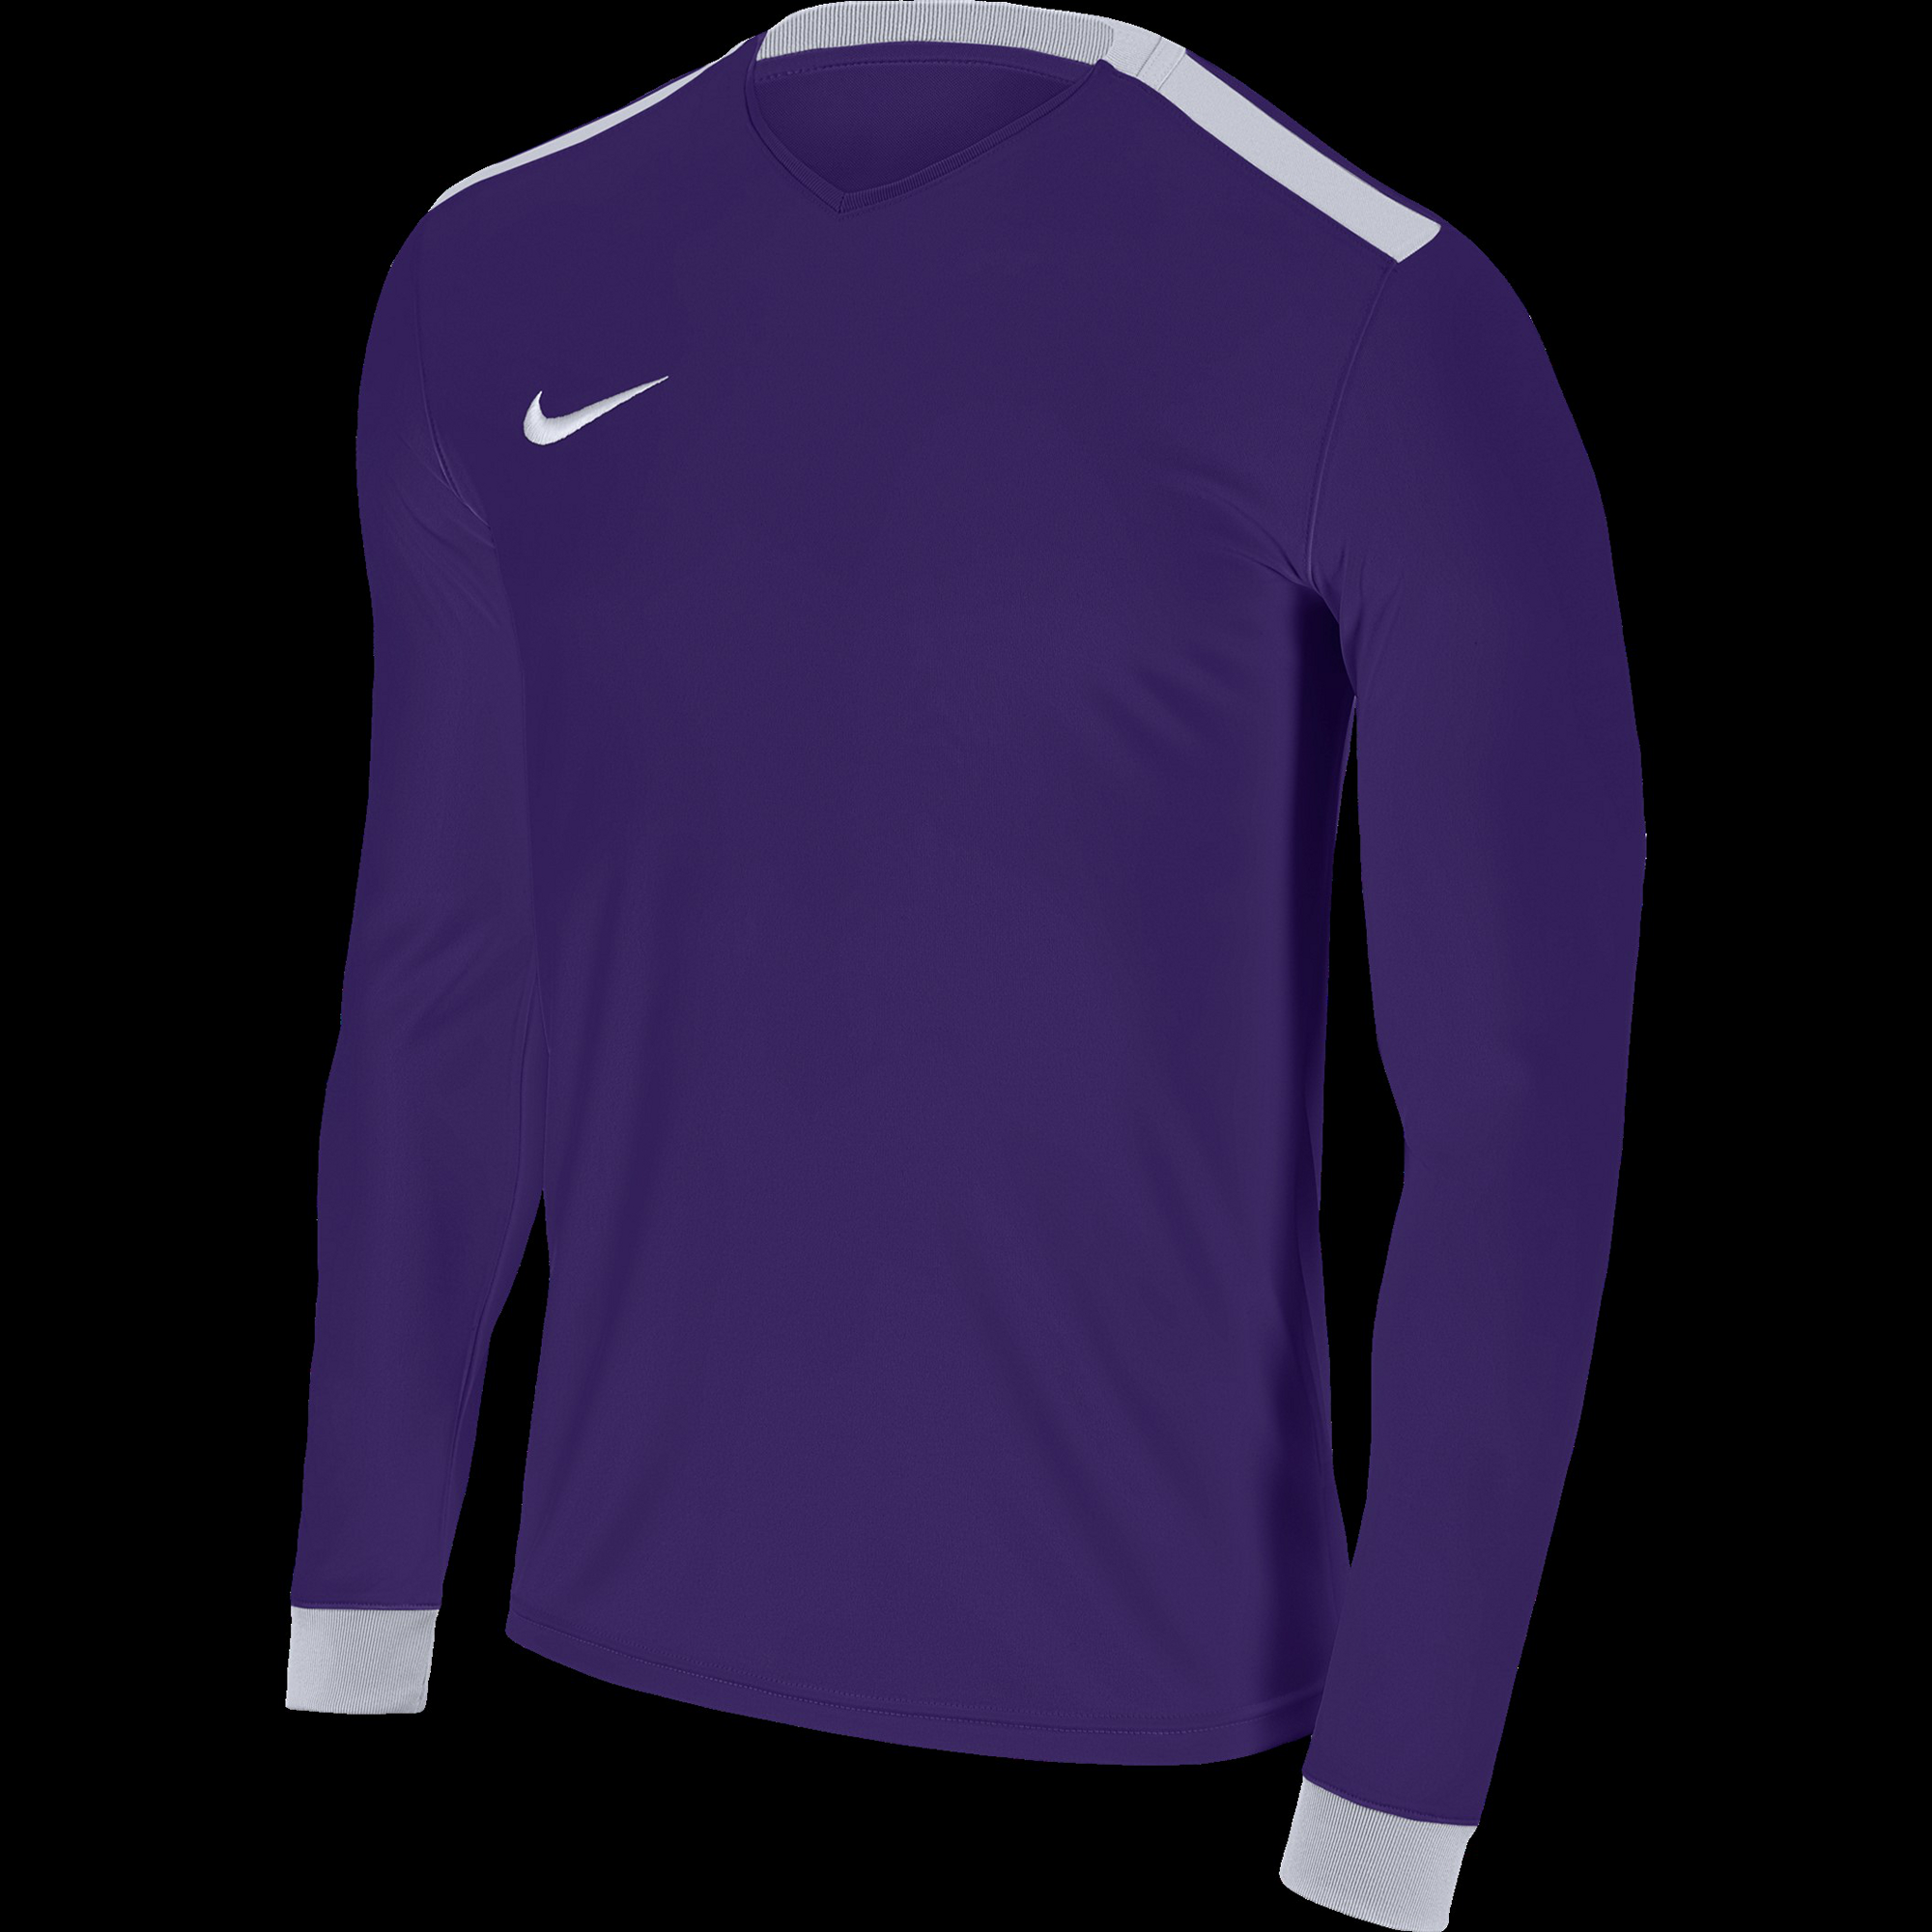 court purple jersey